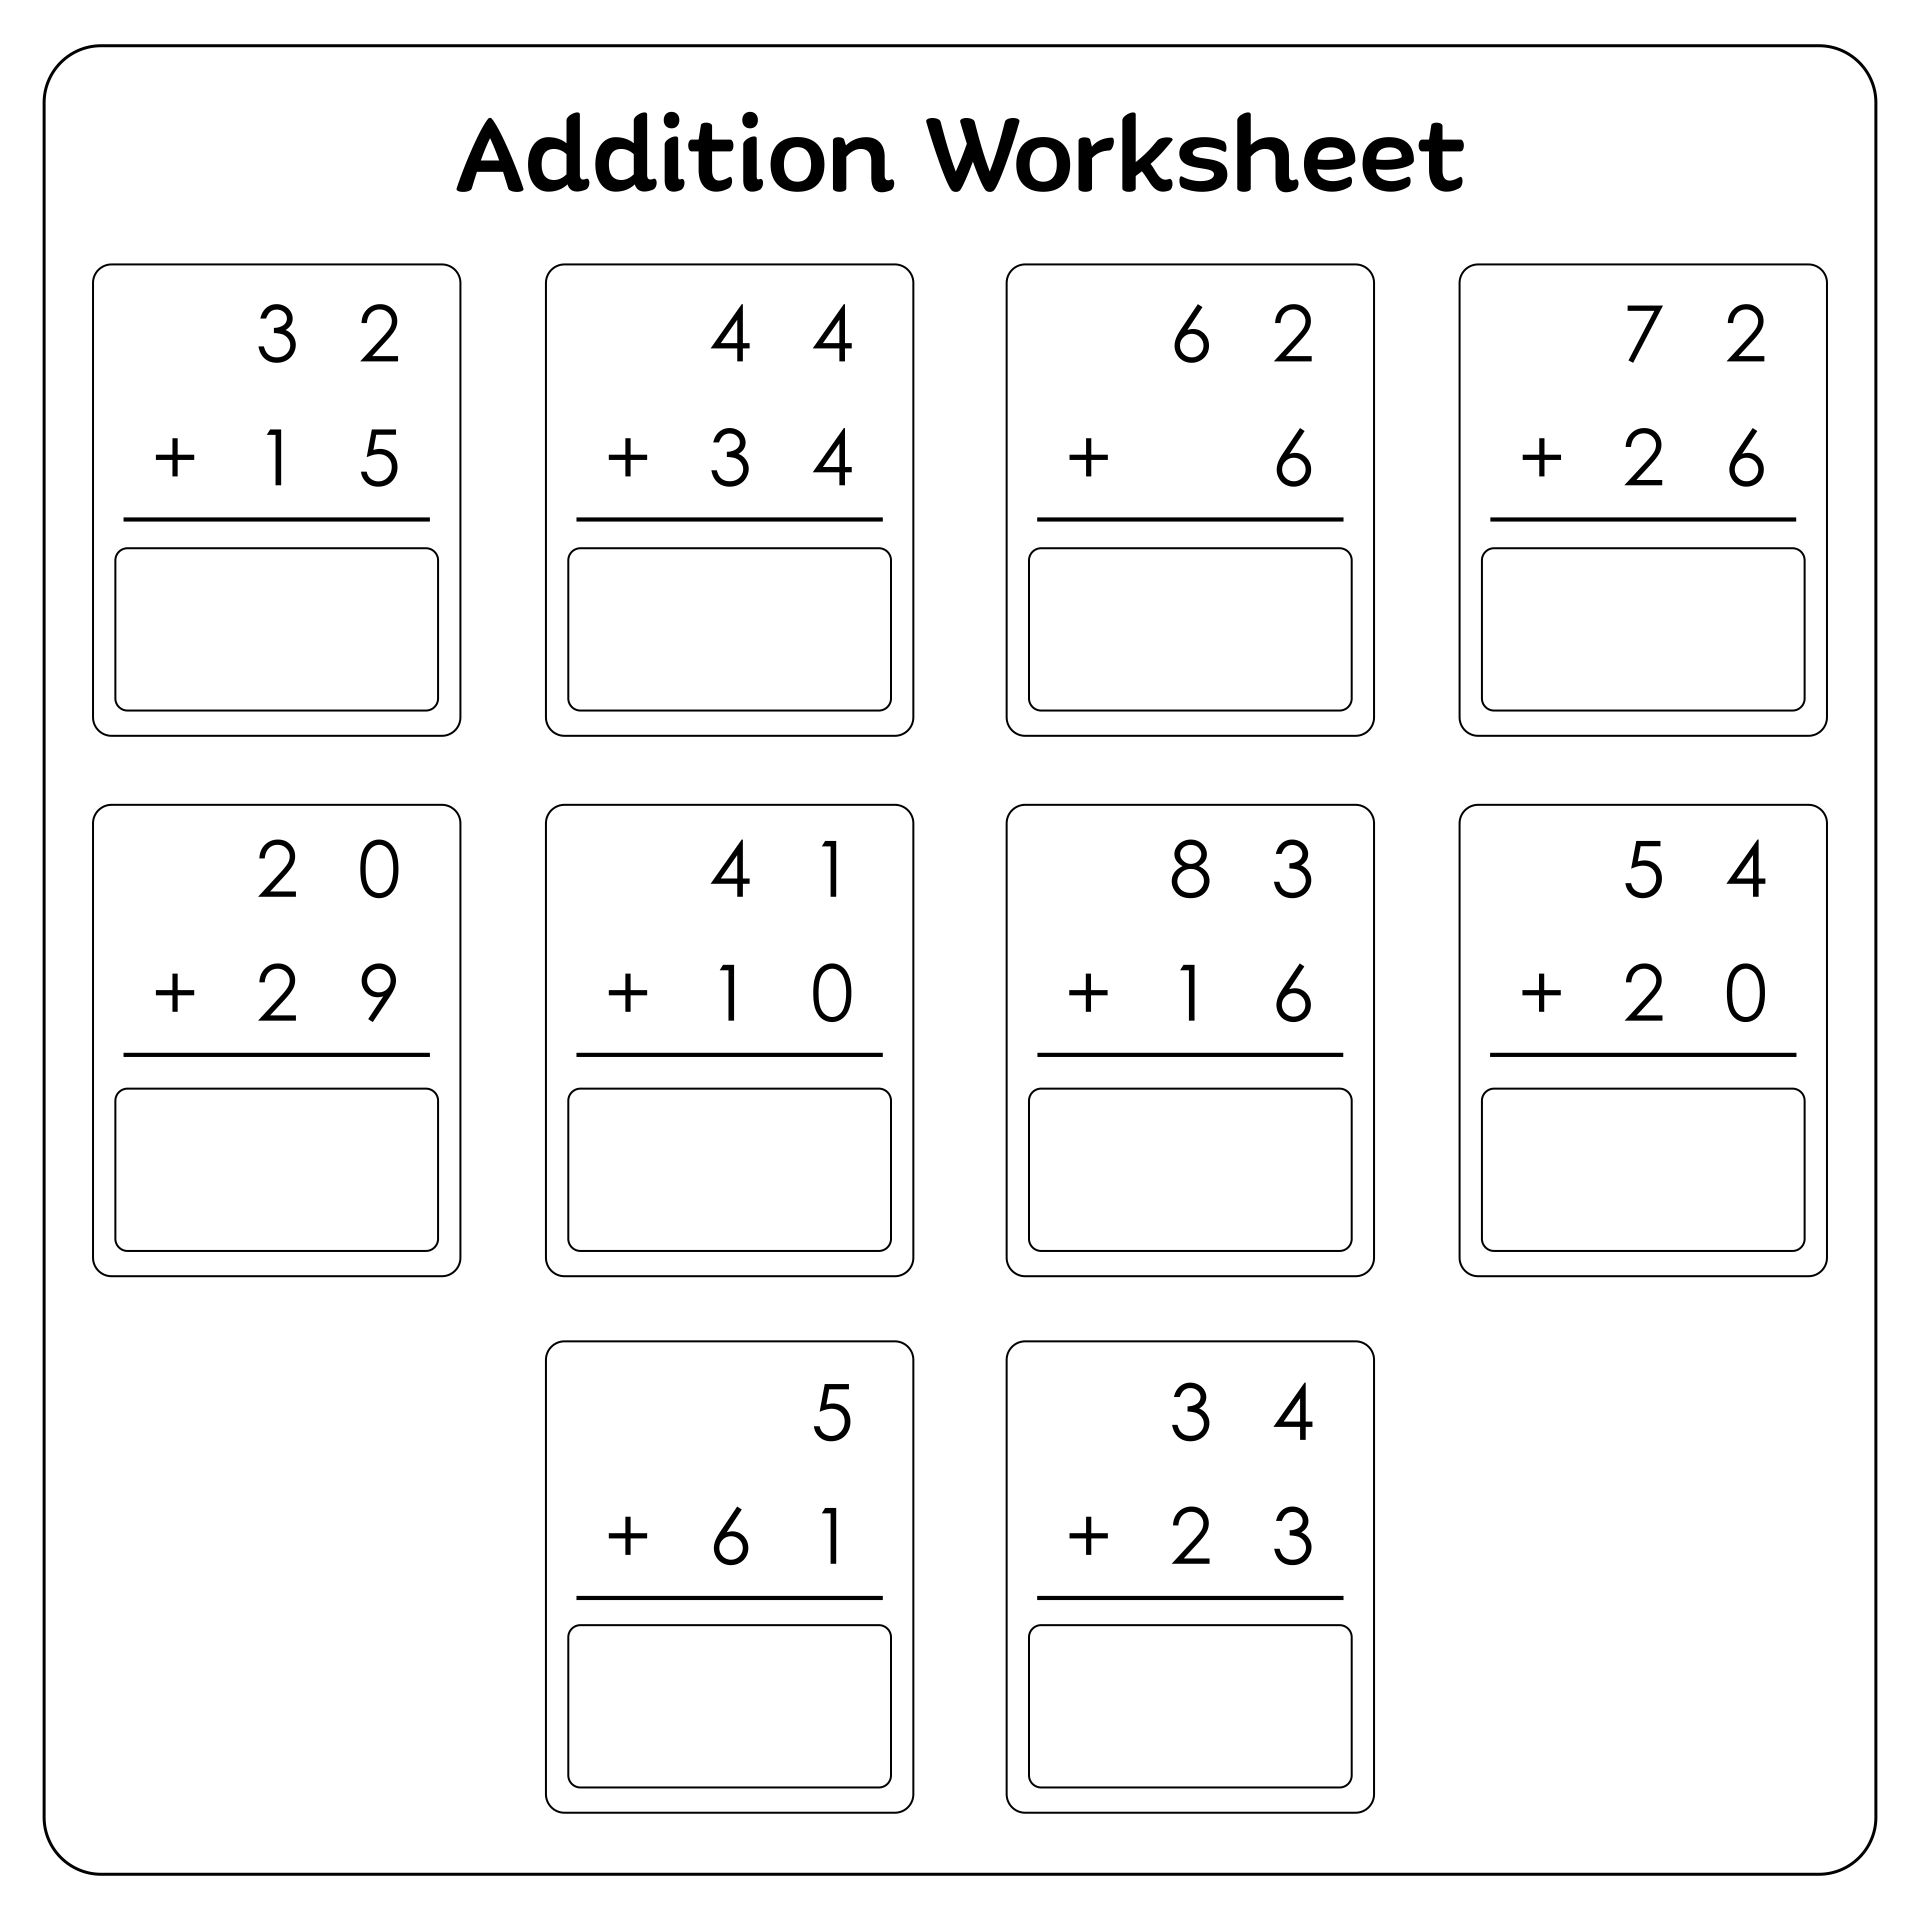 Printable Addition Worksheet